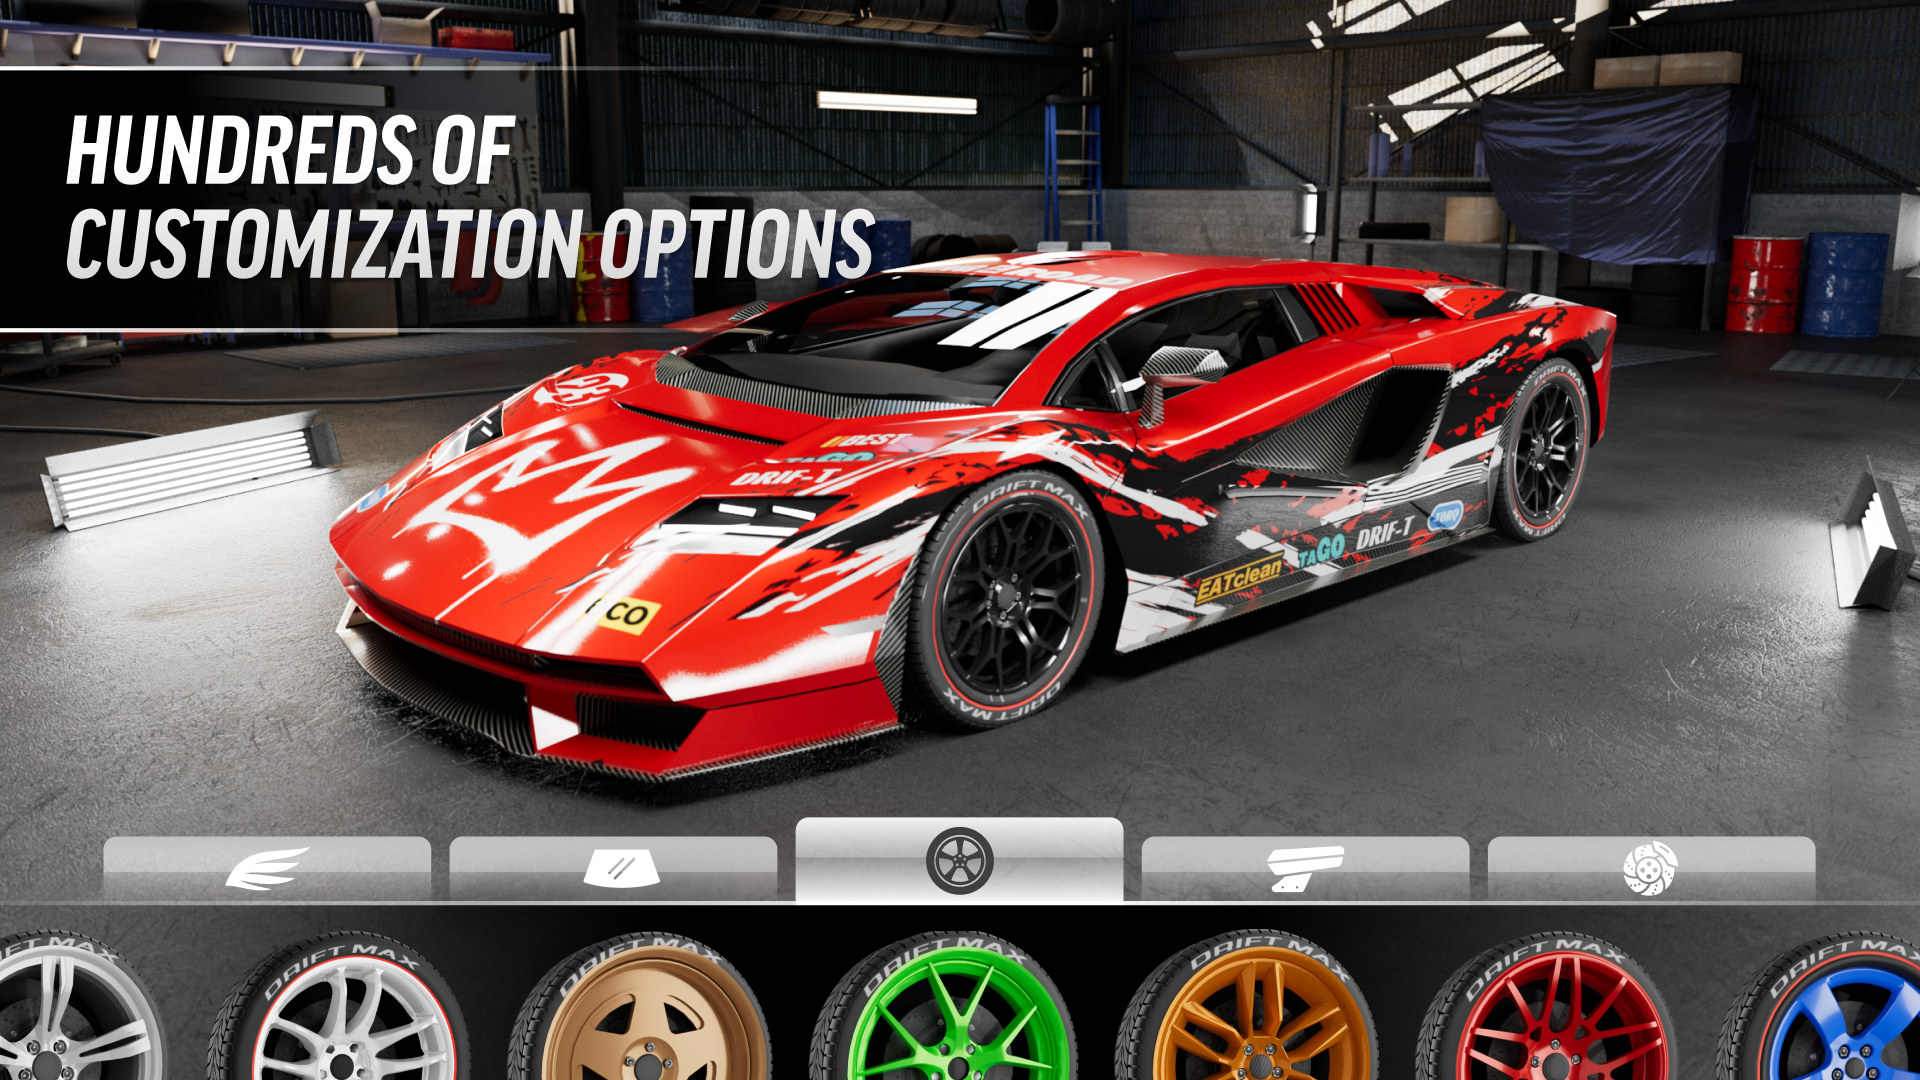 Drift Max City Drift Racing – Apps no Google Play